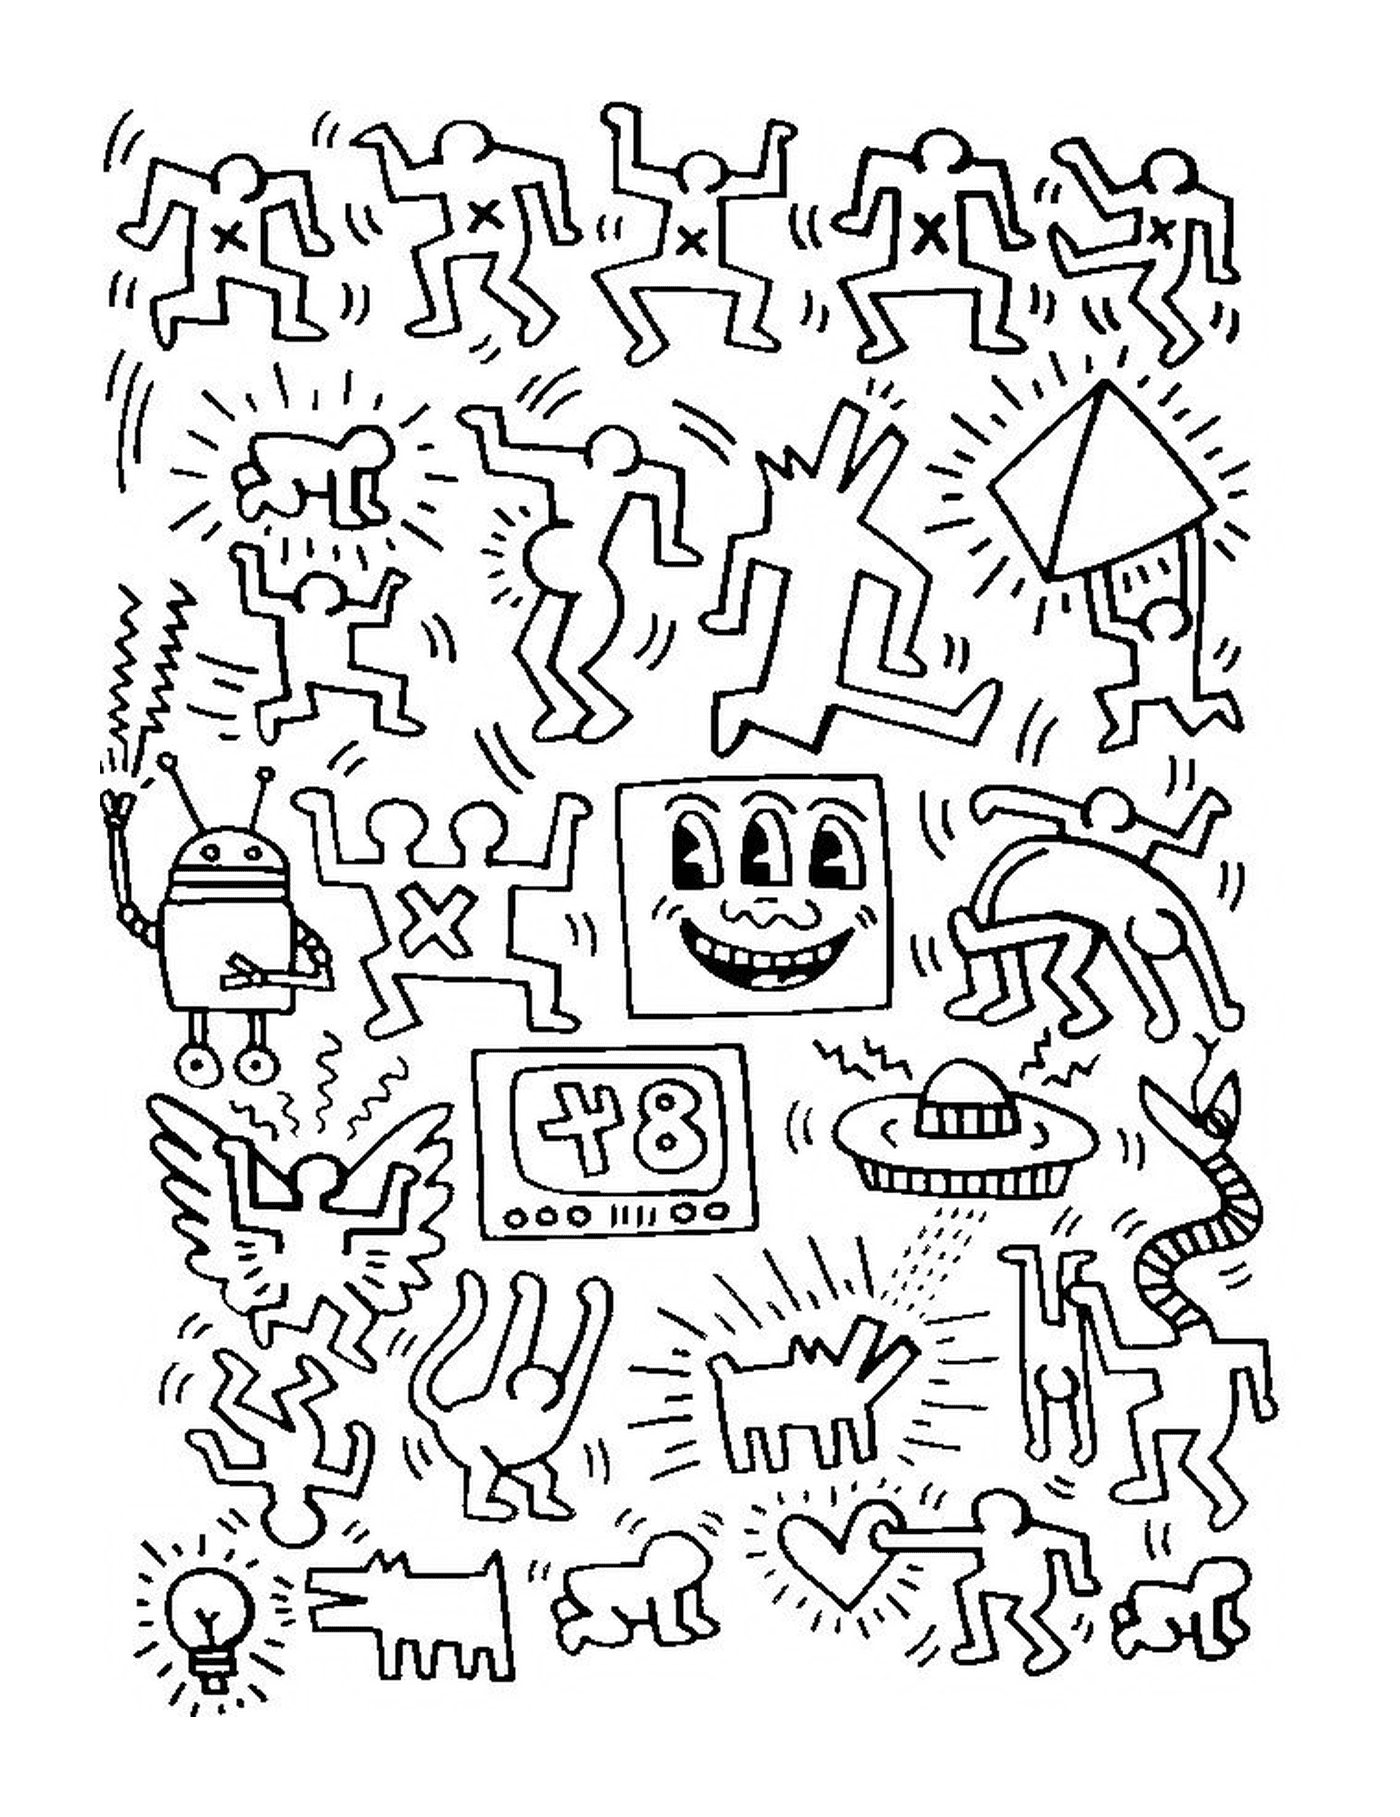   un groupe de personnes selon Keith Haring 